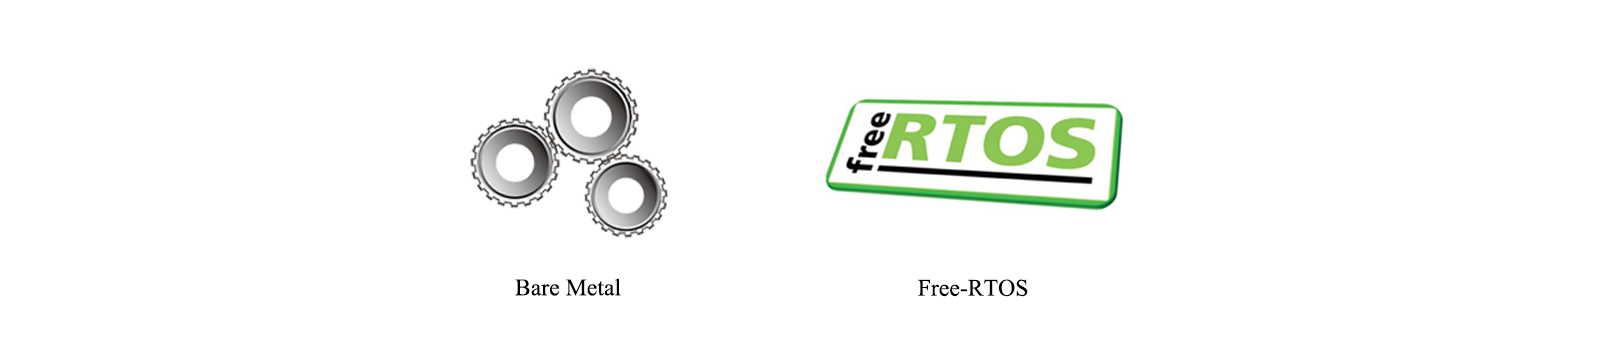 Free-RTOS system